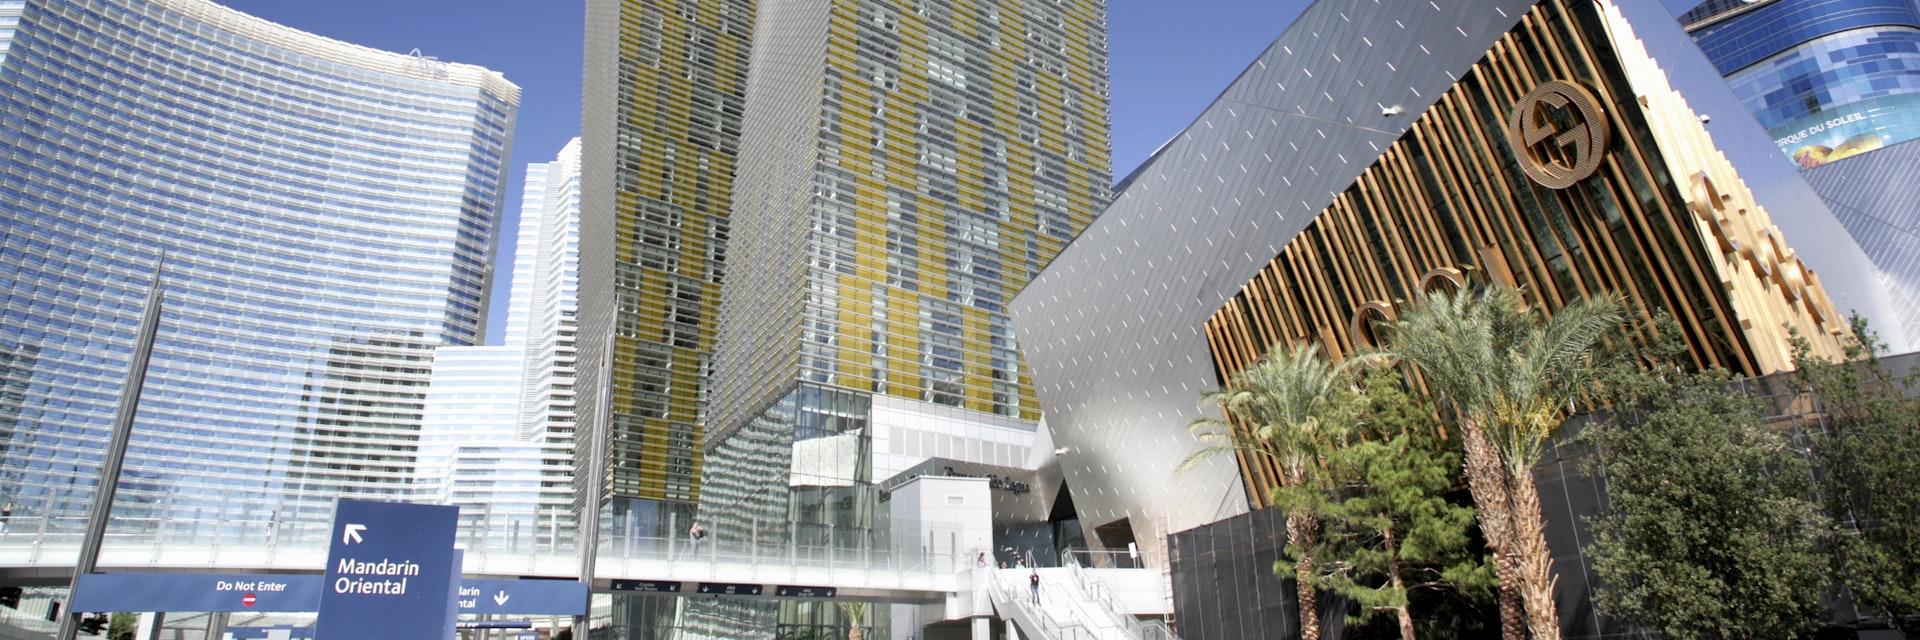 City Center Complex on Las Vegas Strip, Nevada